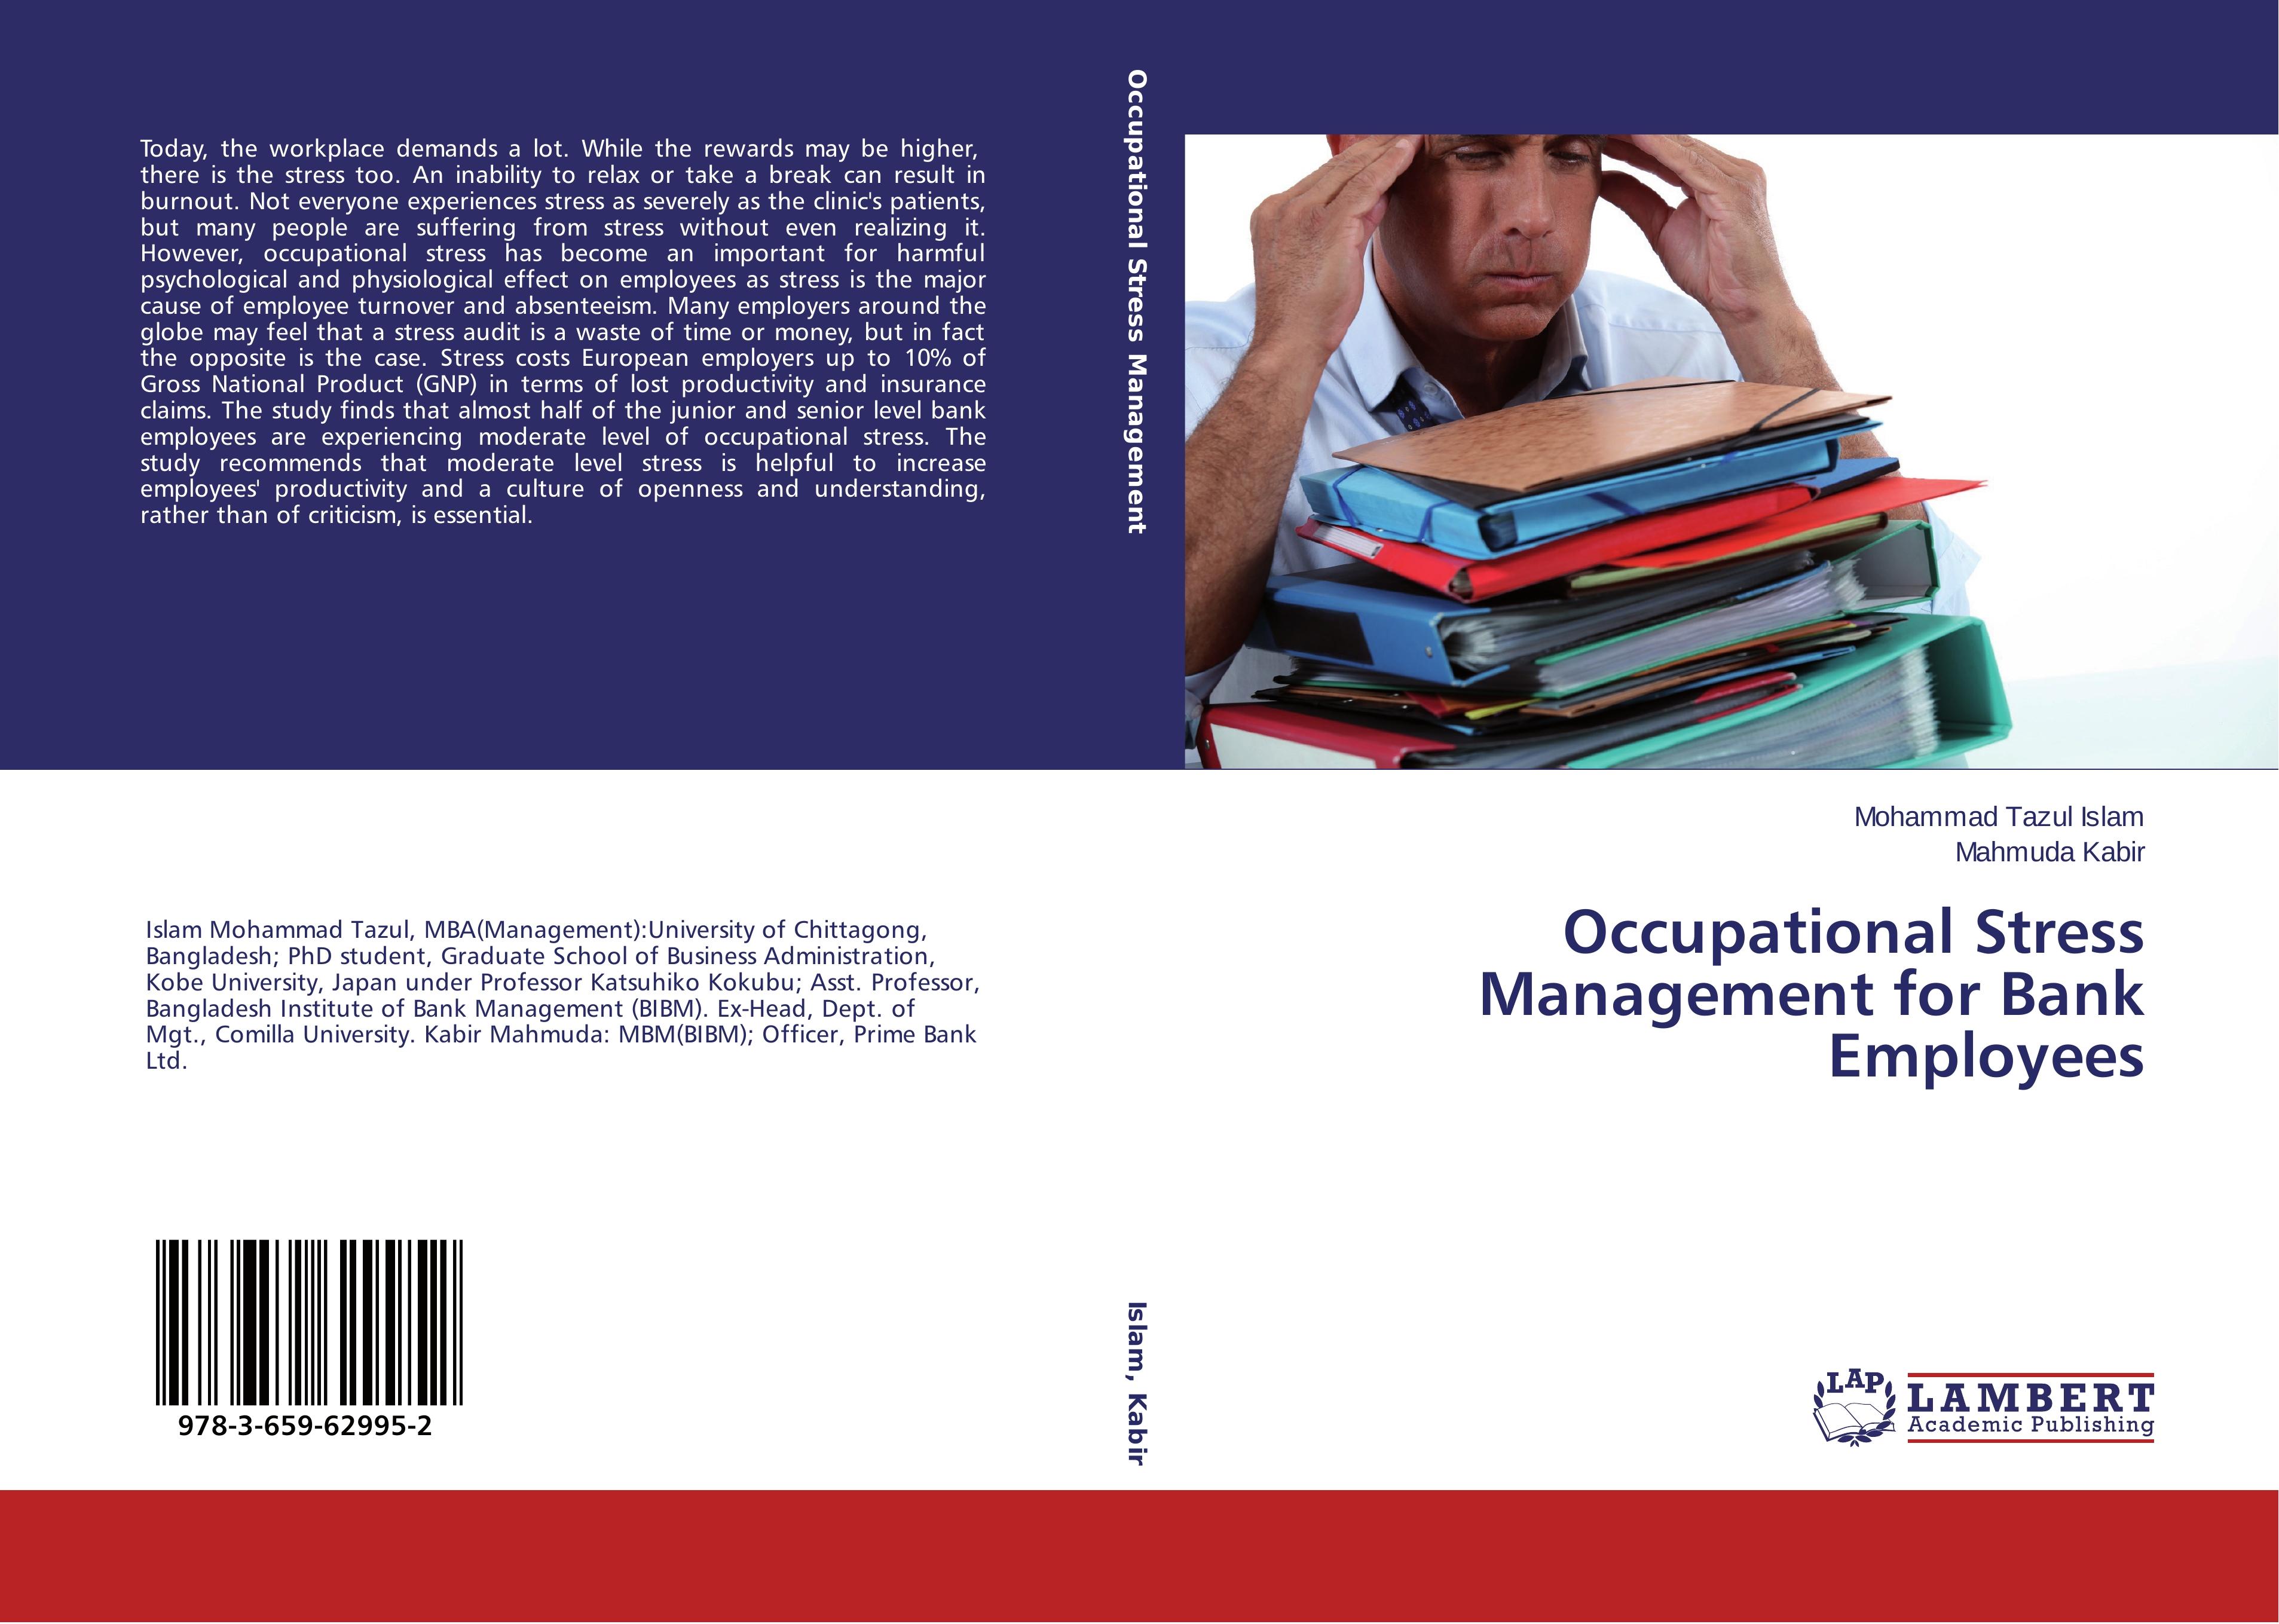 Occupational Stress Management for Bank Employees - Mohammad Tazul Islam Mahmuda Kabir